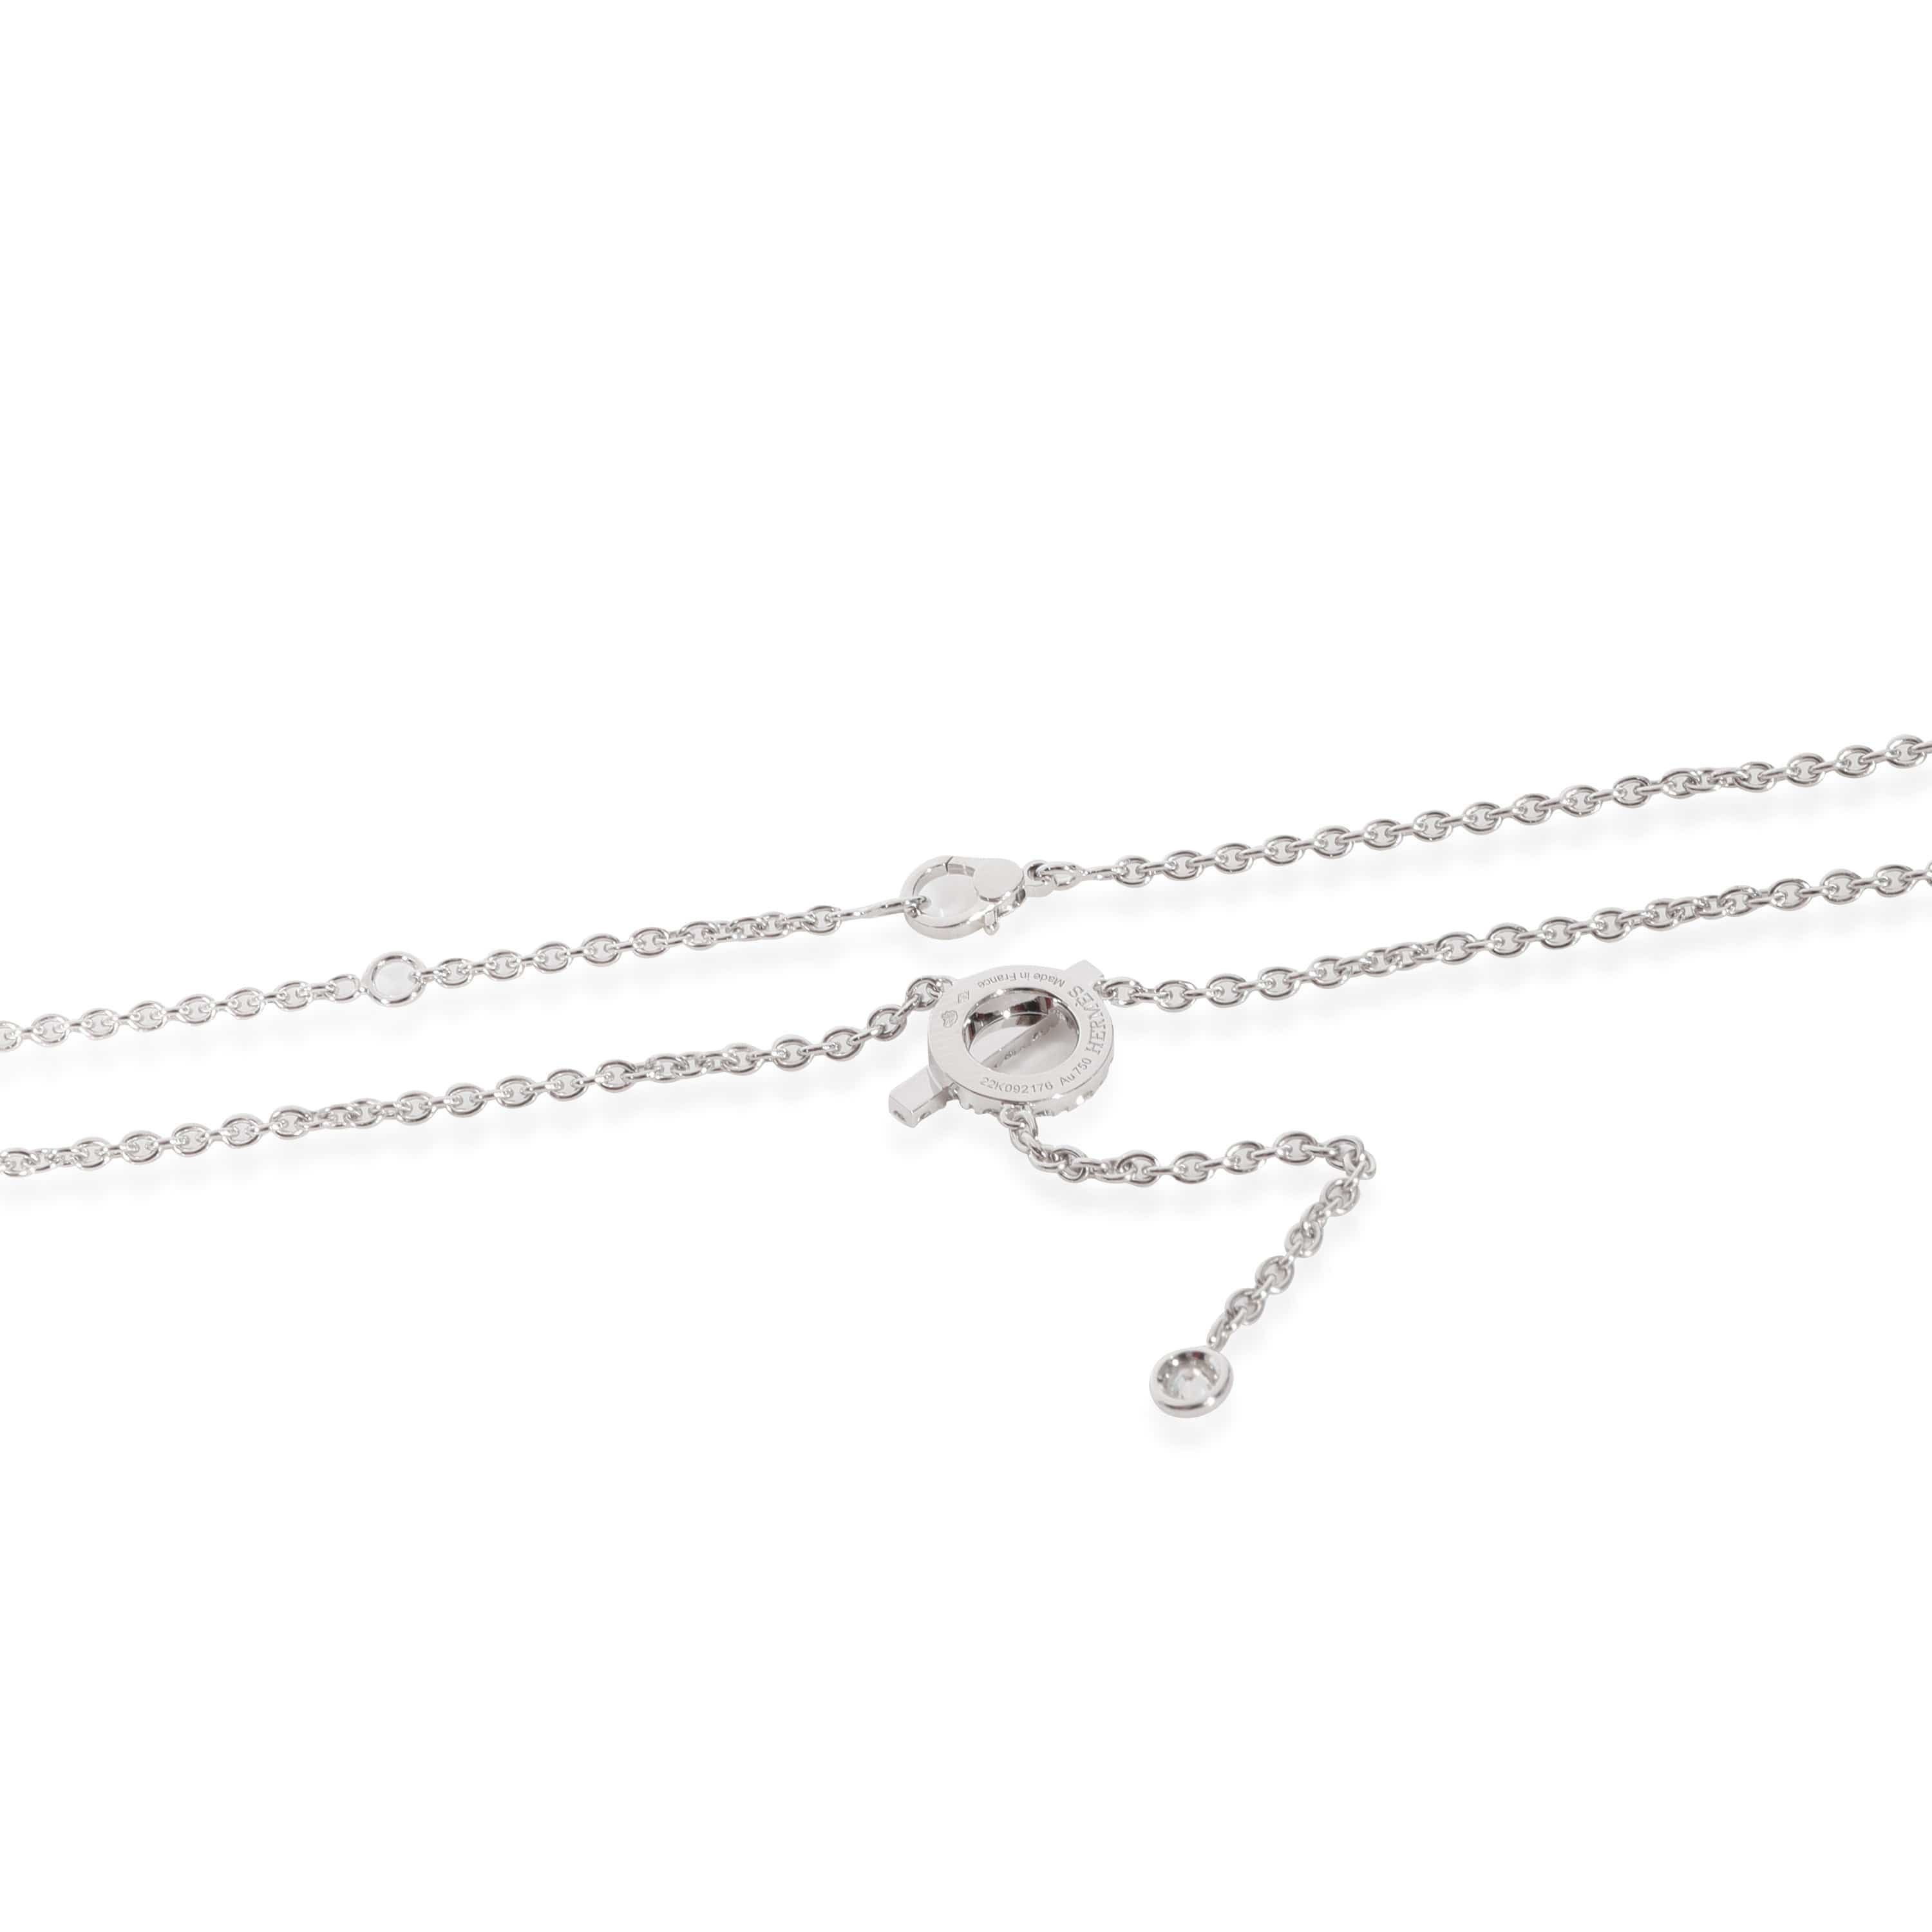 Hermès Hermès Finesse Diamond Necklace in 18k 18 Karat White Gold 0.55 CTW